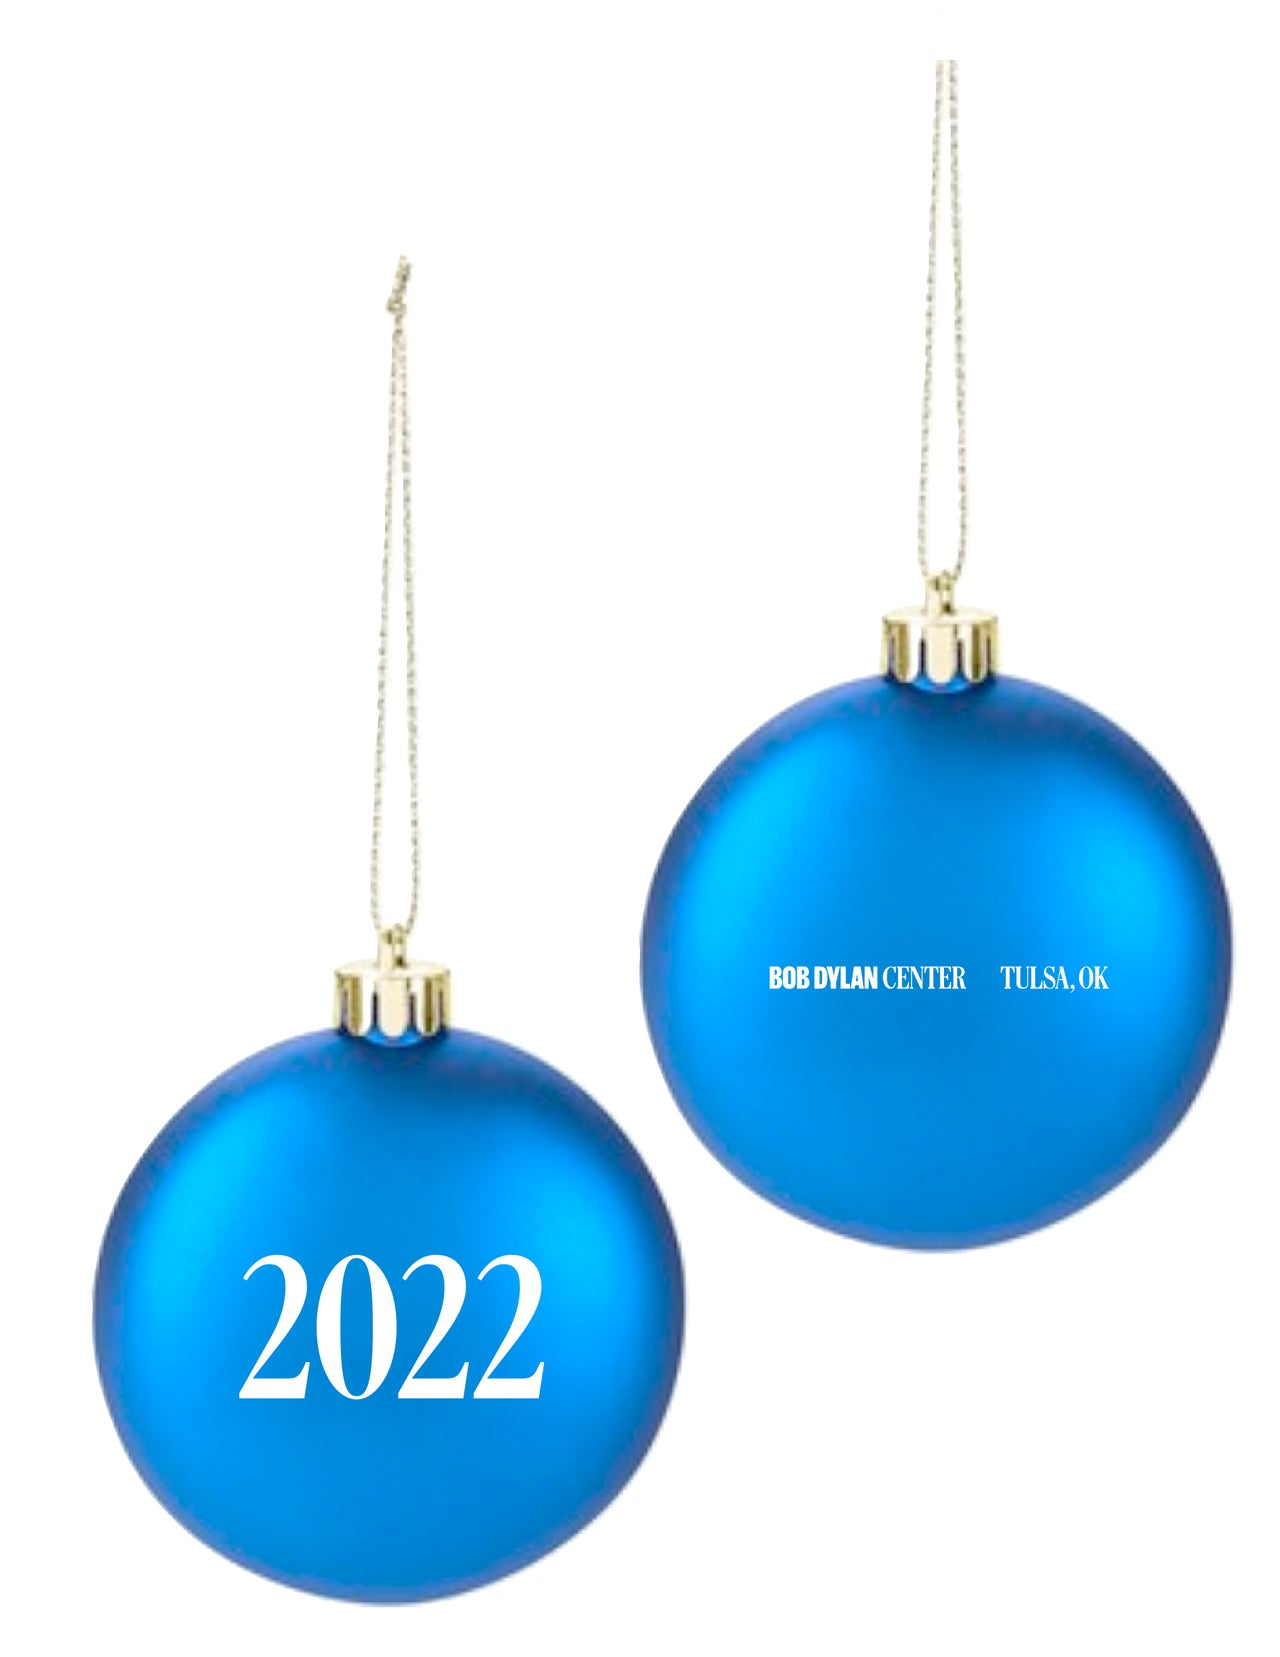 Bob Dylan Center Logo Ornament 2022